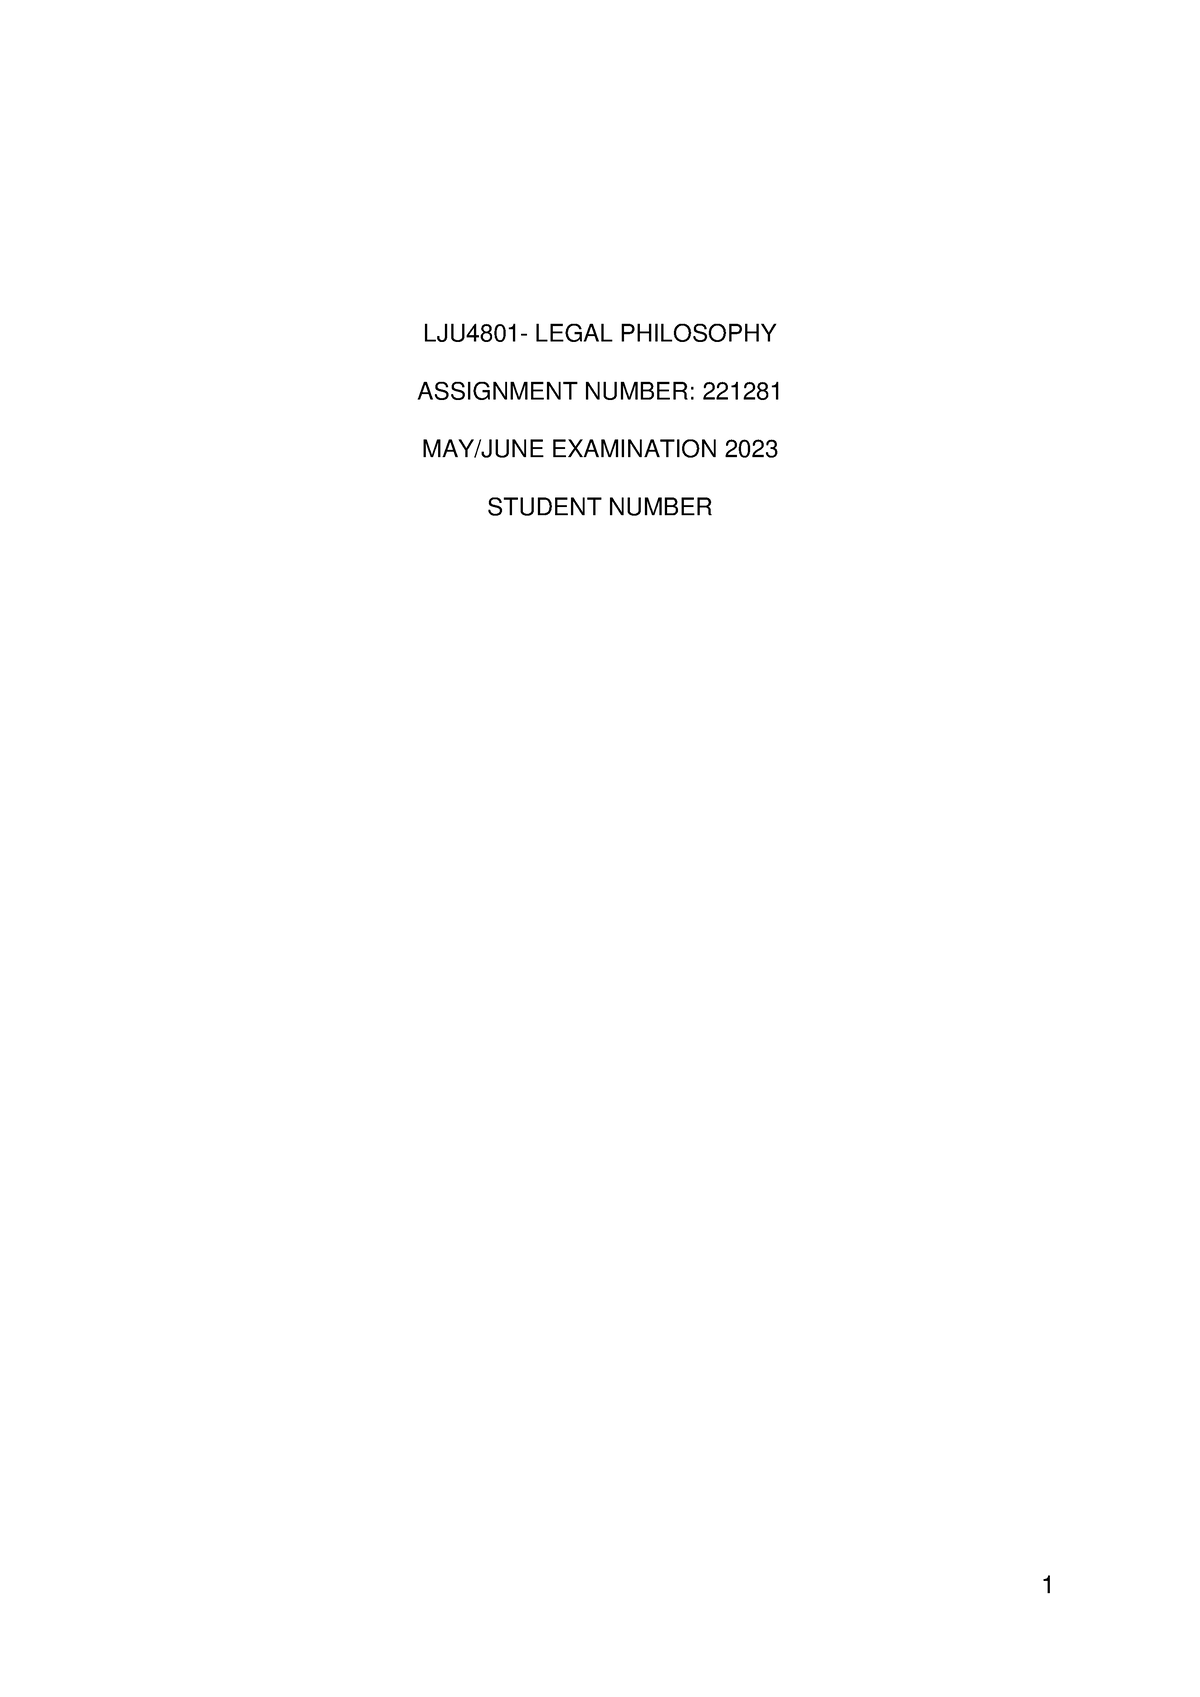 LJU4801 Assignment 3. Final Portfolio 2023 upload - LJU4801- LEGAL ...